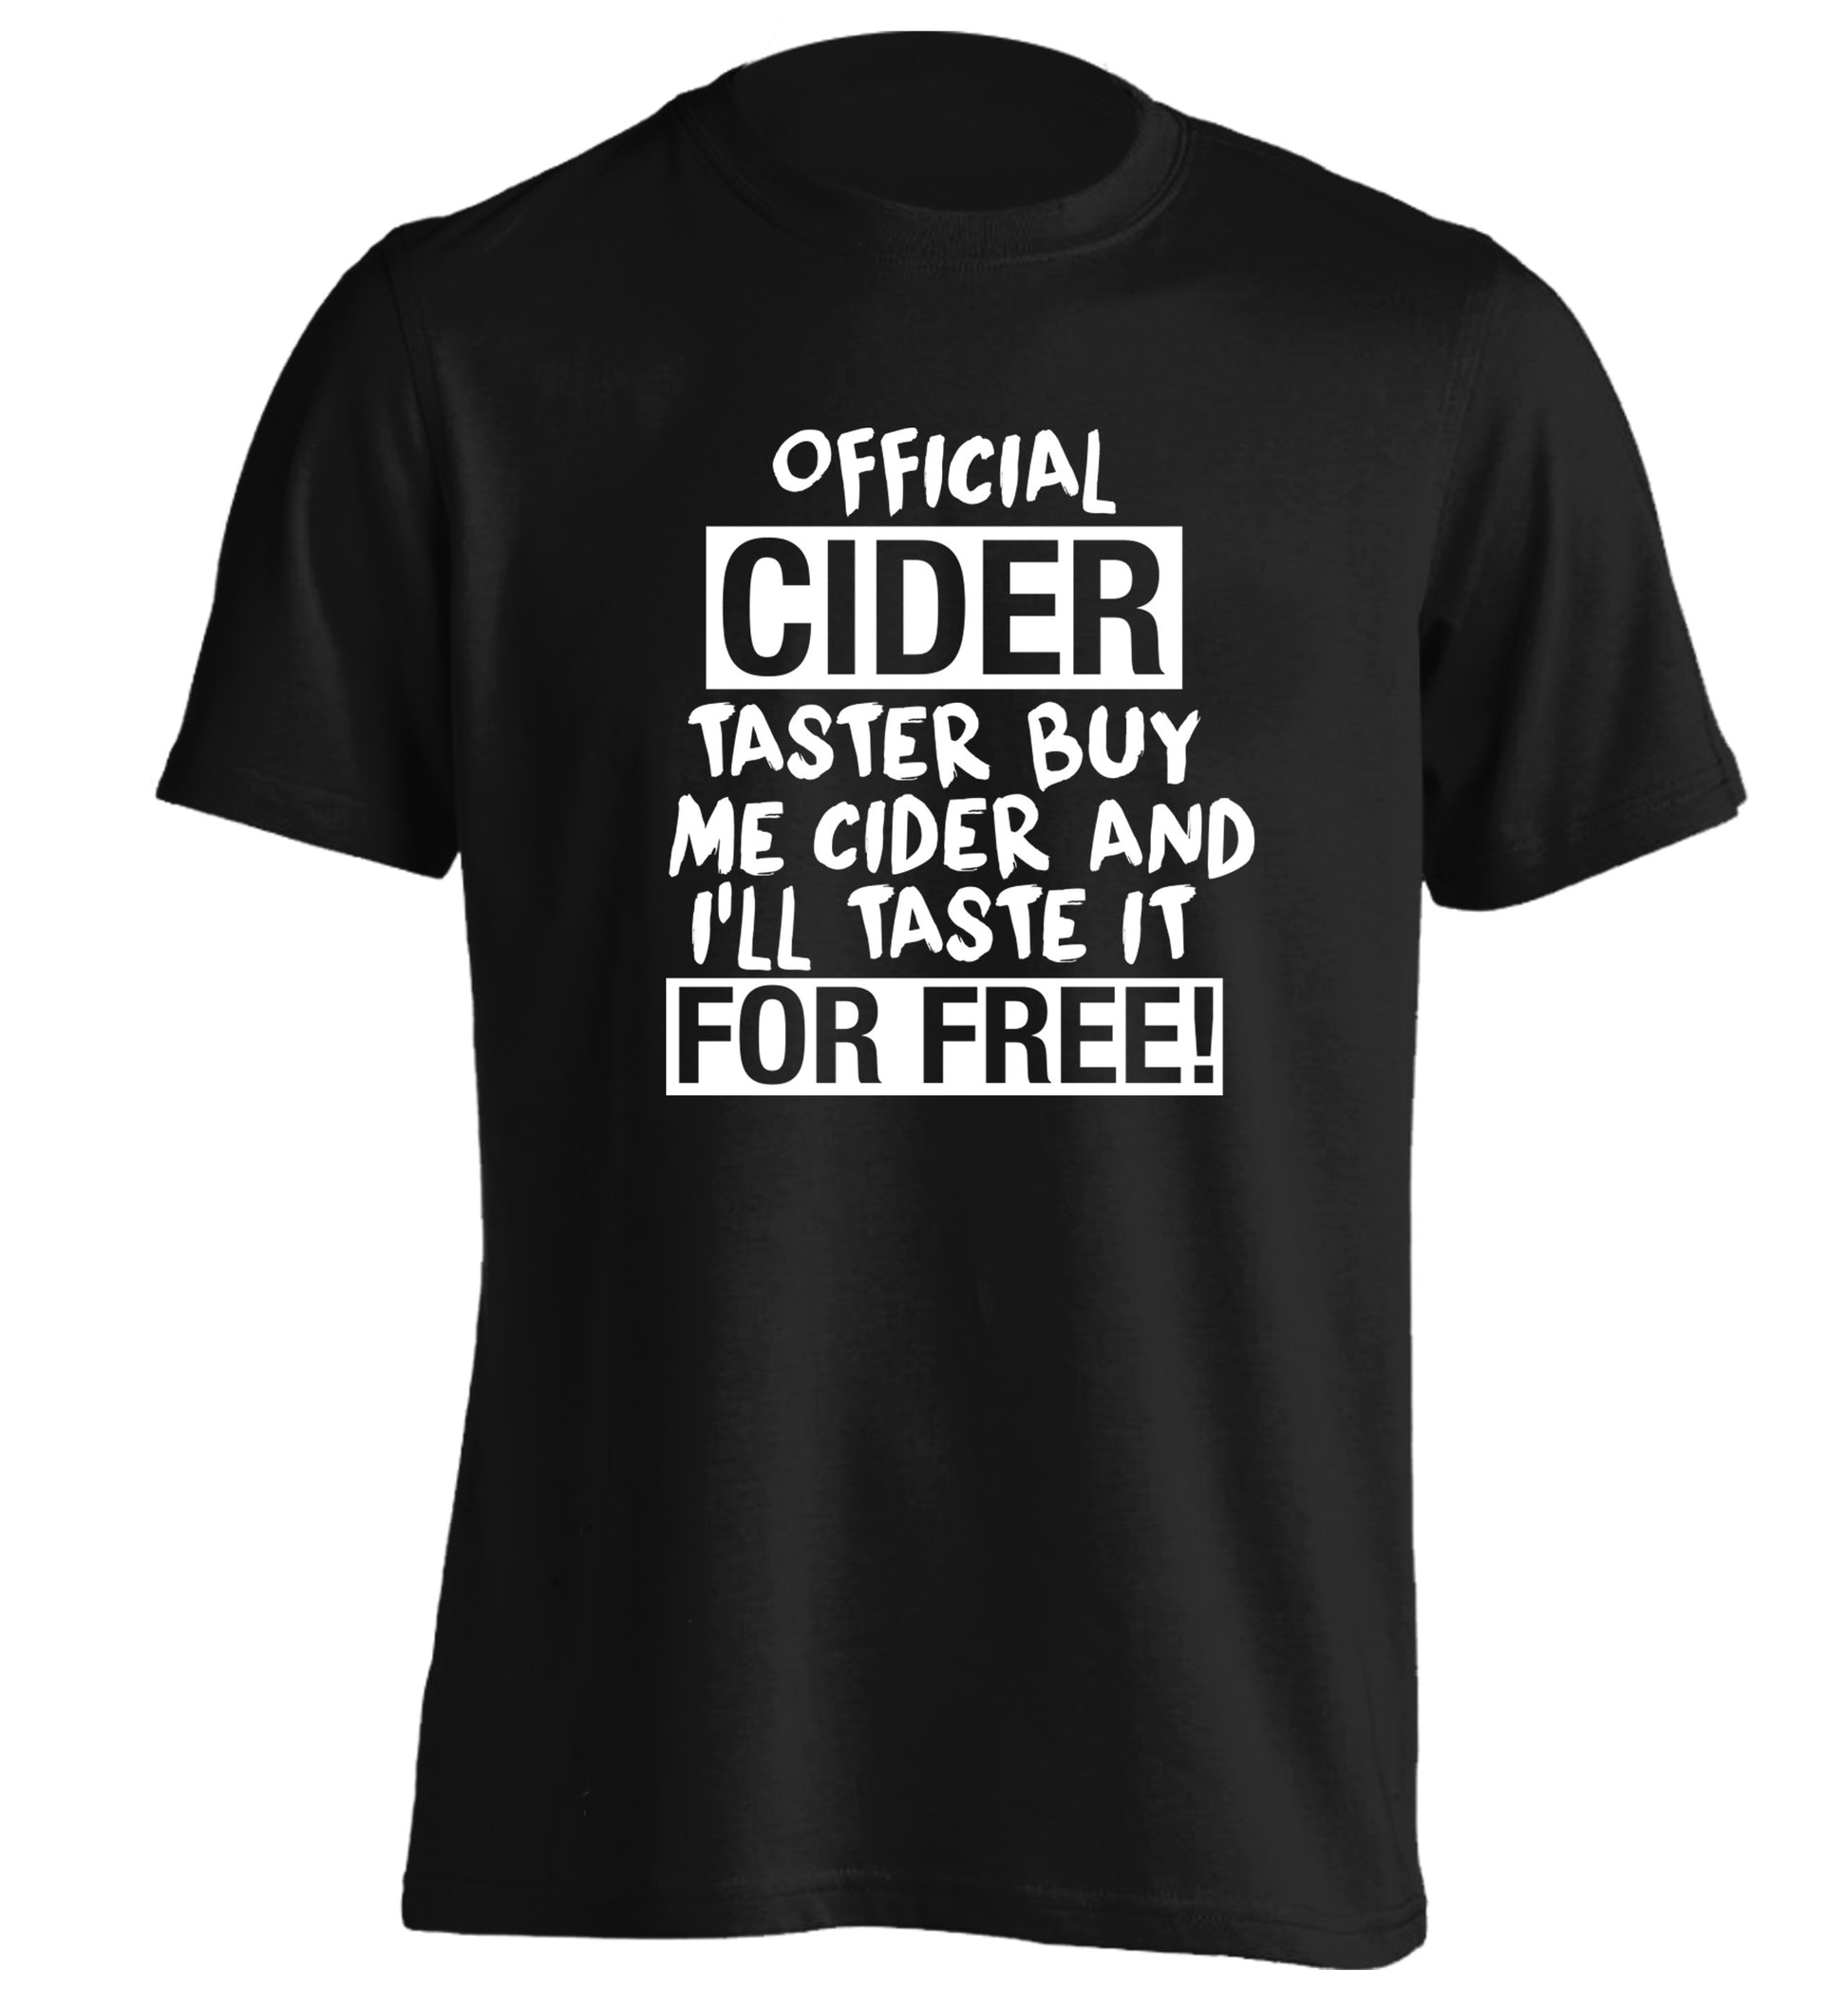 Official cider taster buy me cider and I'll taste it for free! adults unisex black Tshirt 2XL